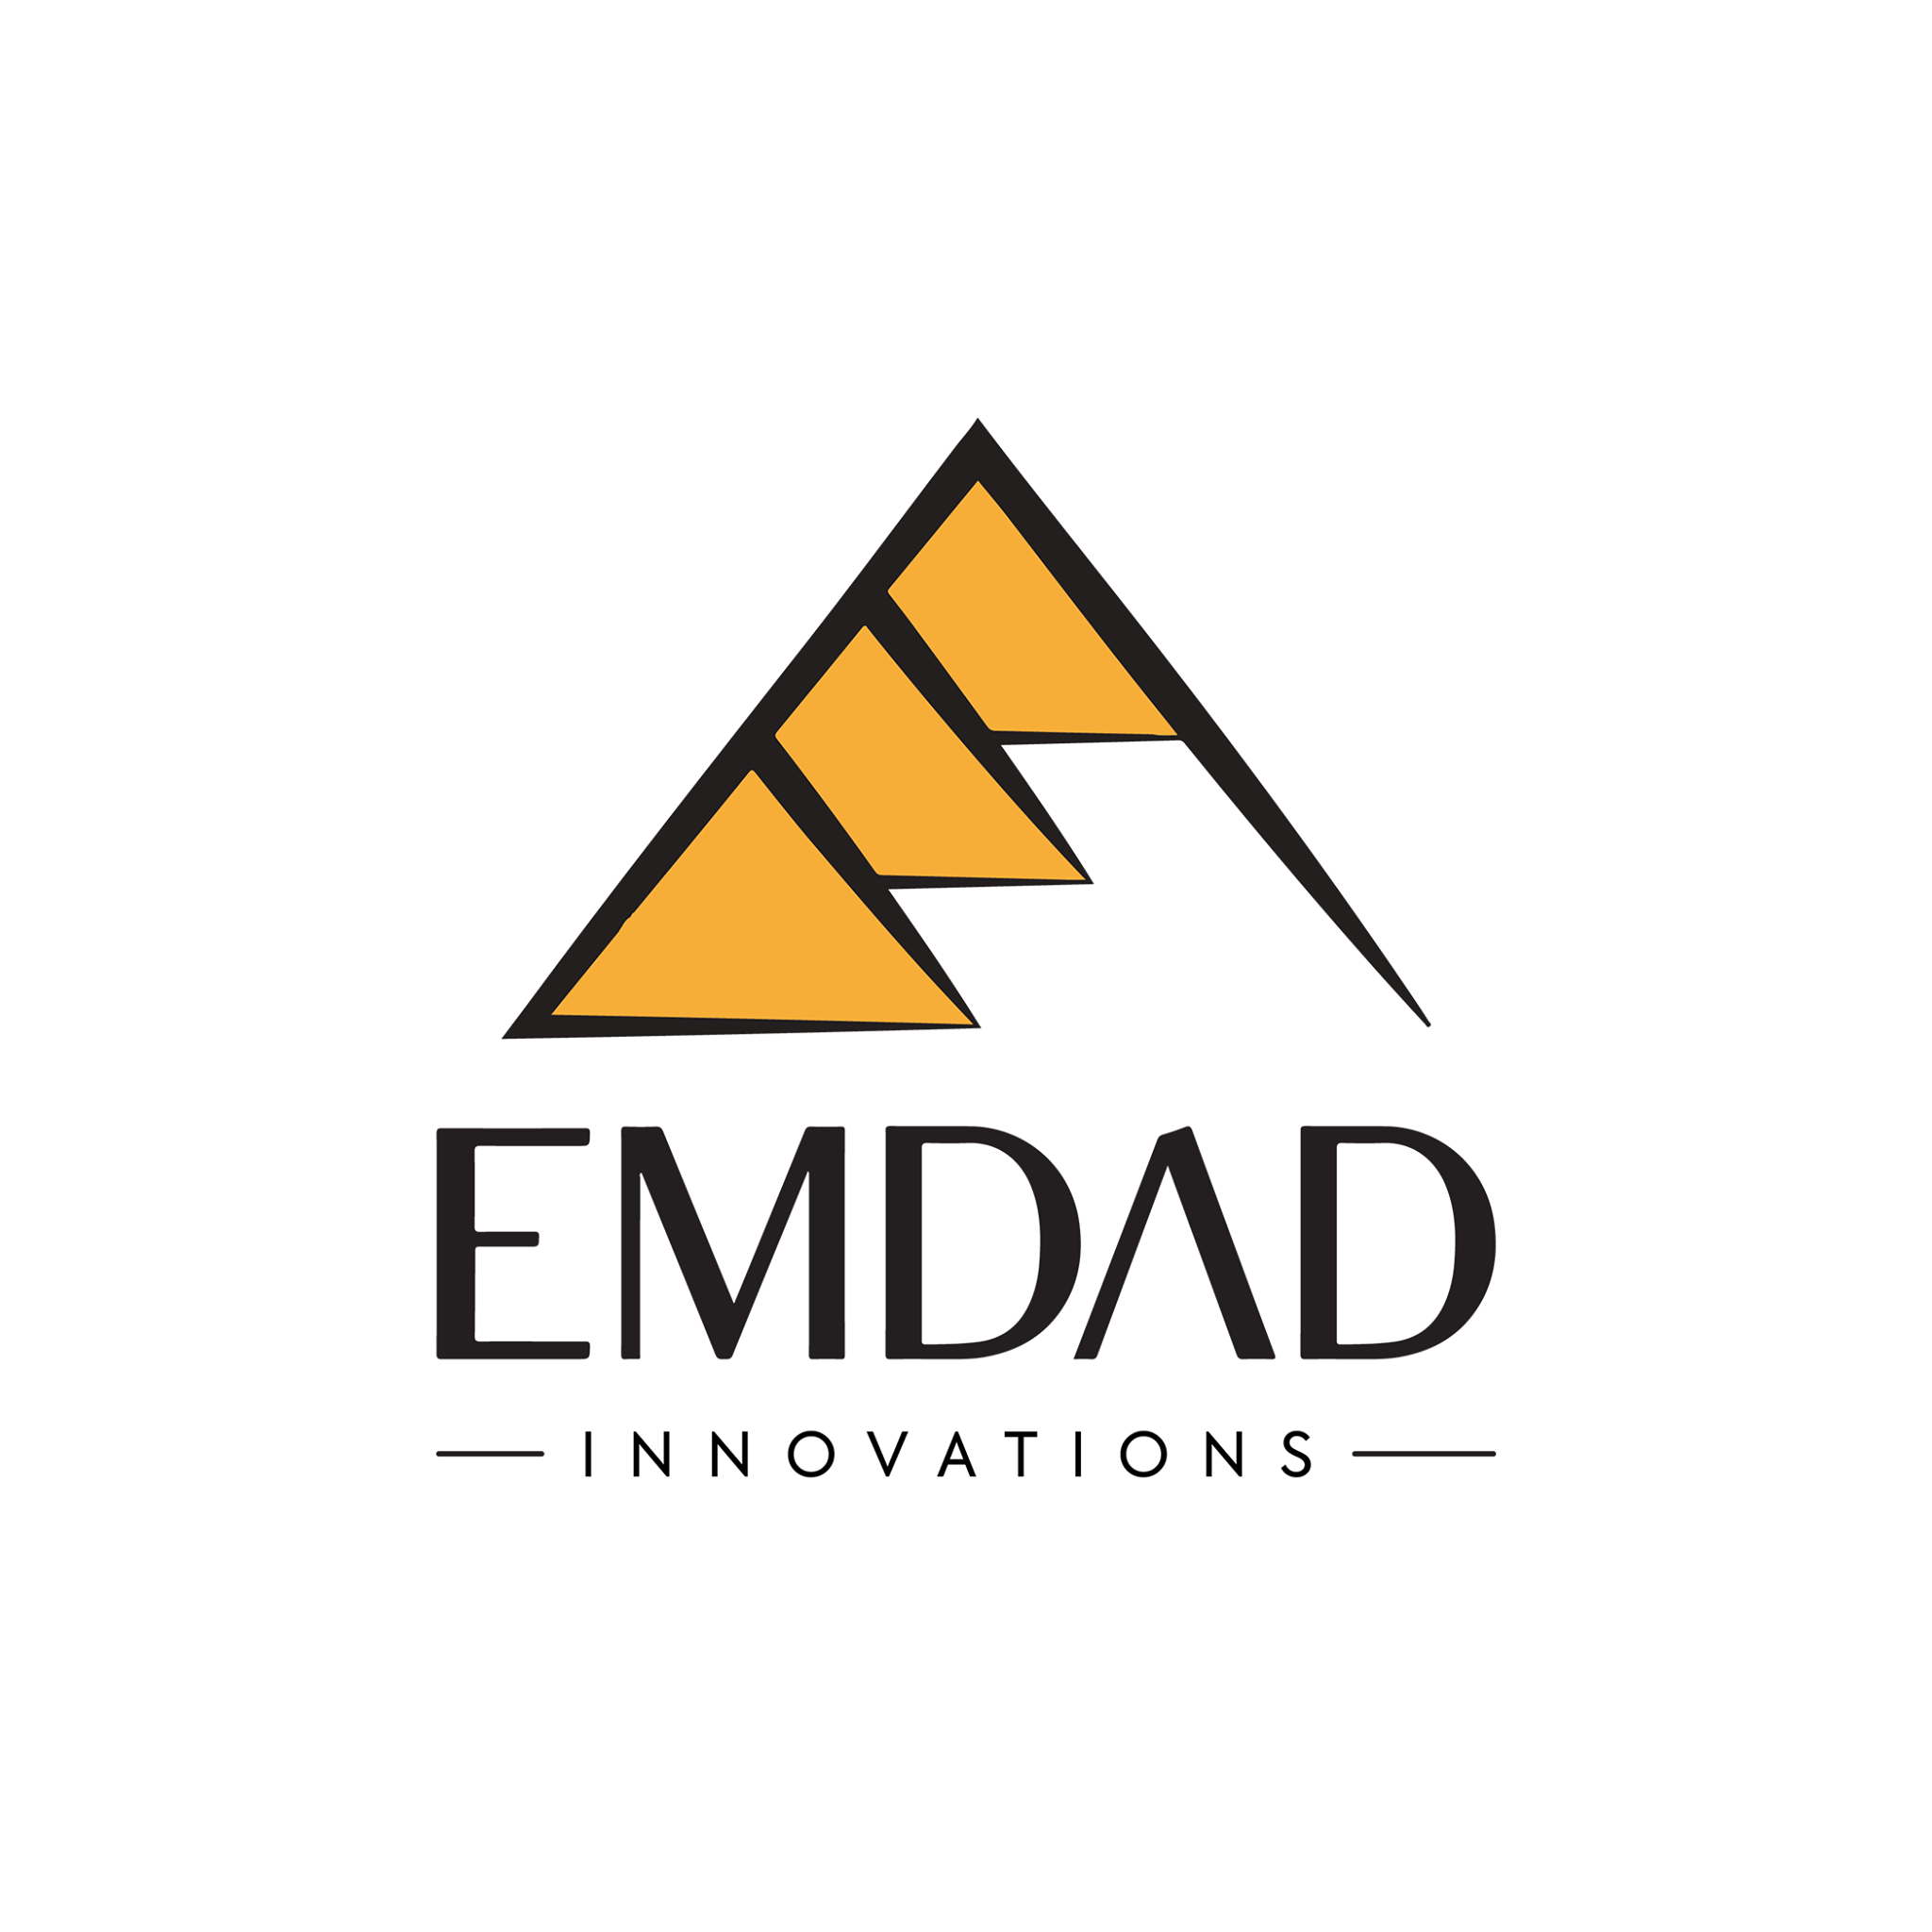 Emdad for design and project management